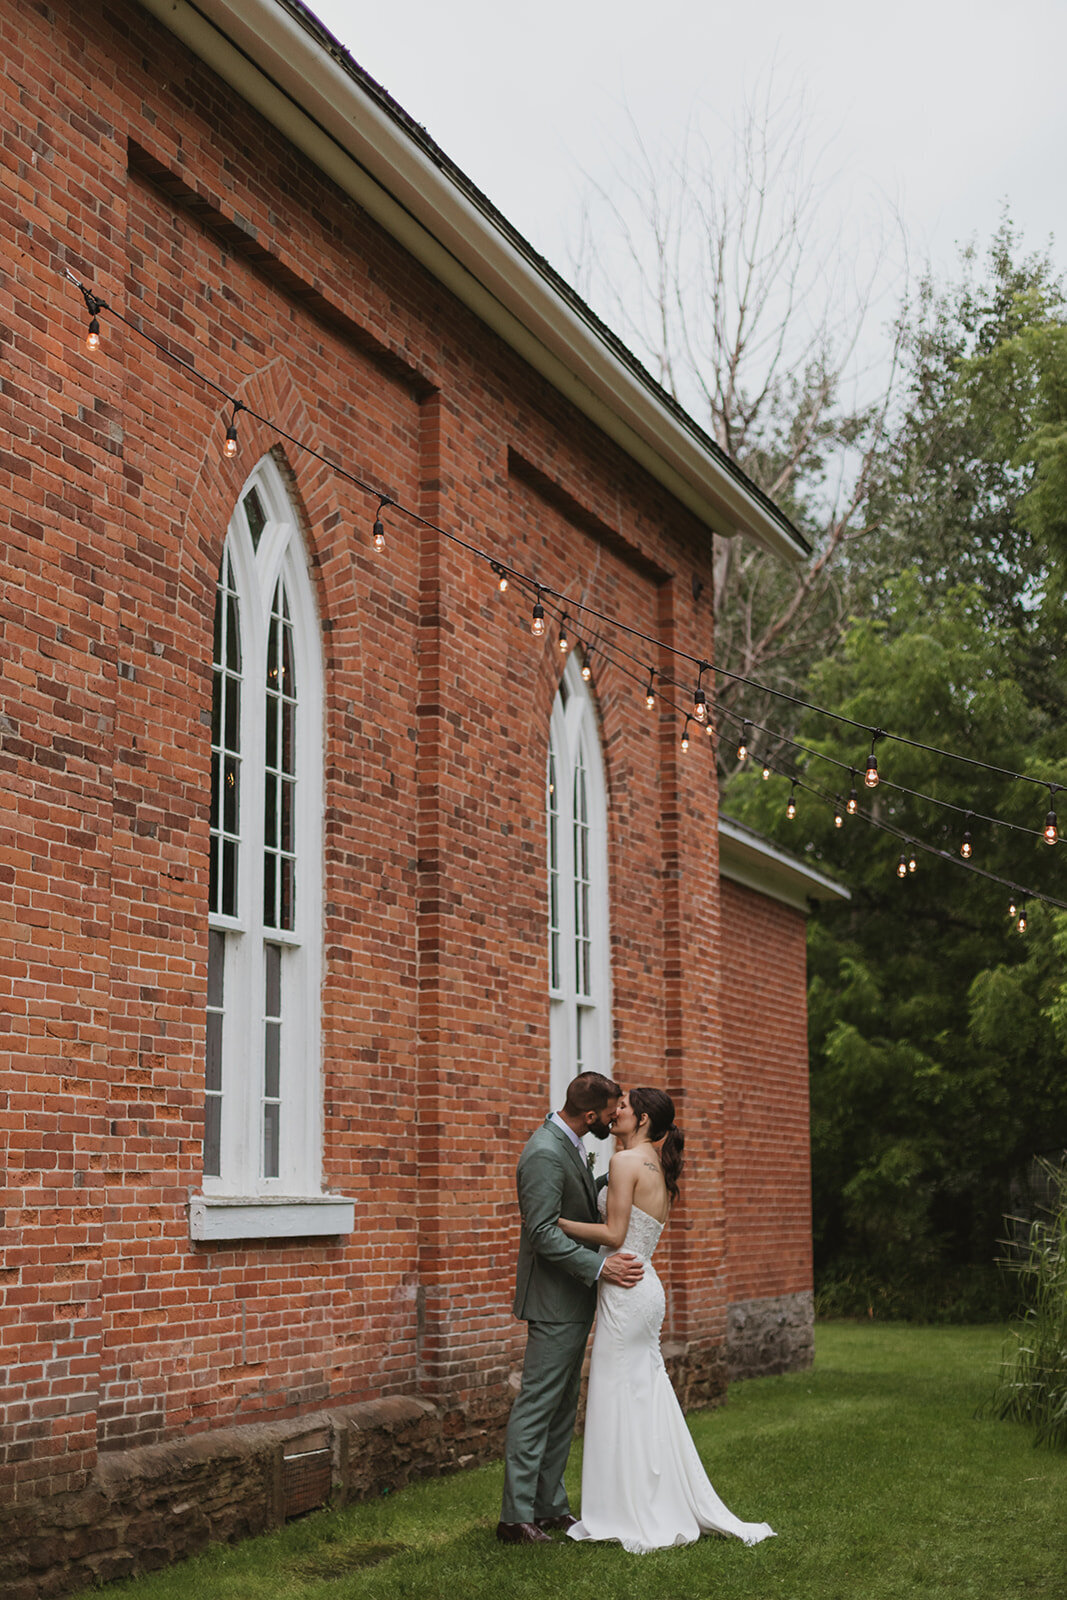 North Saplings Photography - The Knox Wedding in Ottawa - 40